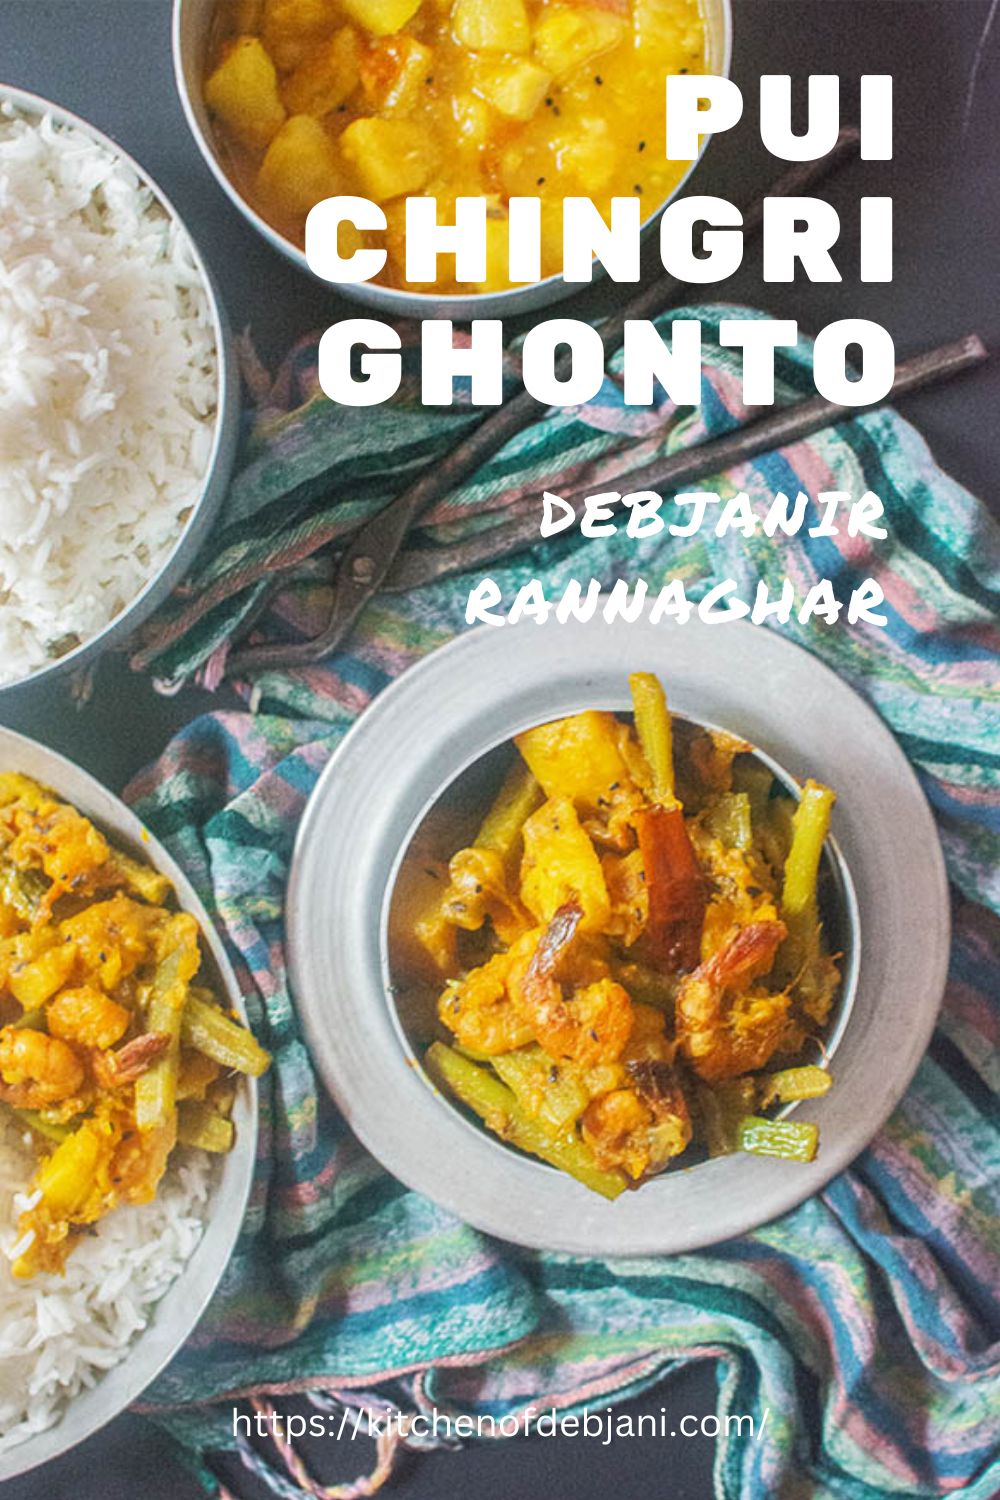 %Pui Chingri Ghonto debjanir rannaghar Food Recipe Pinterest Pin